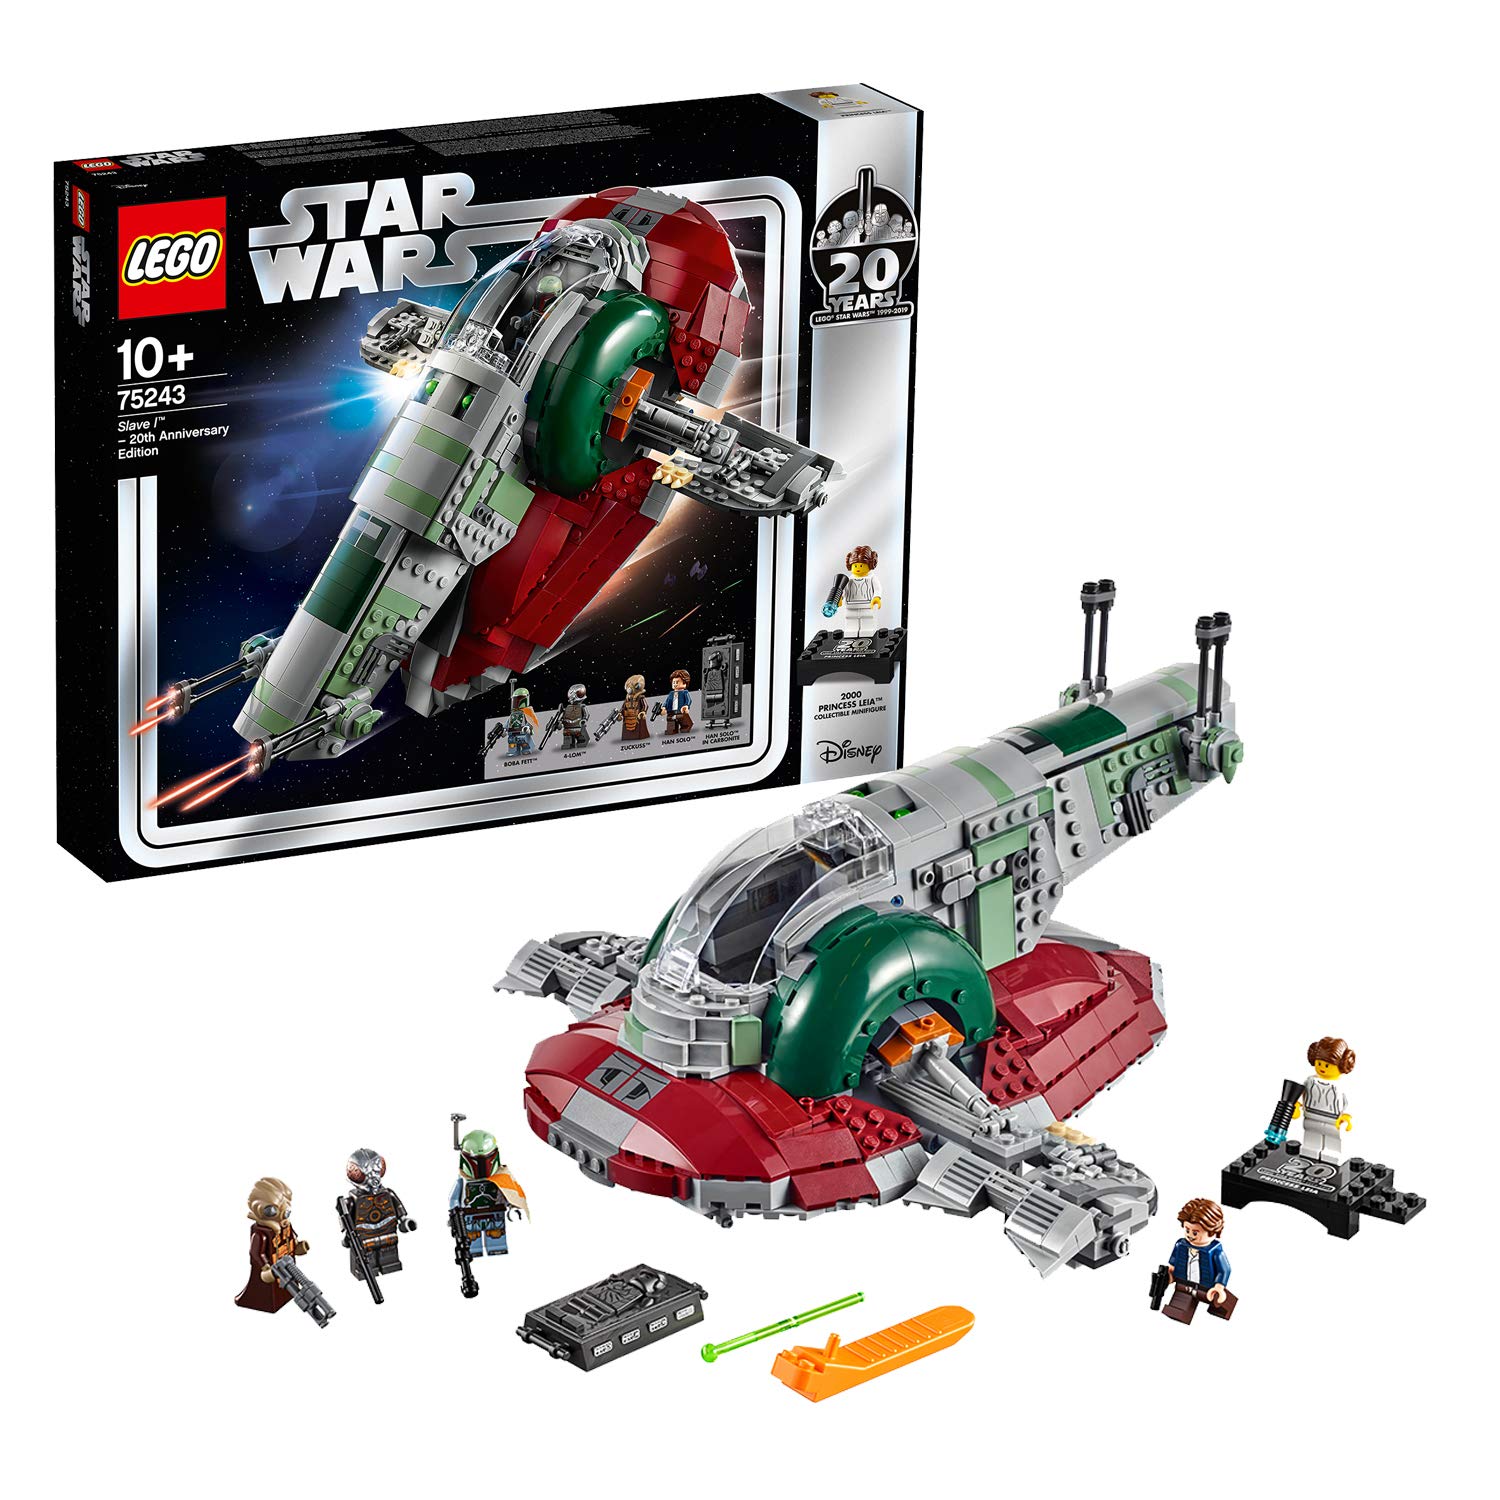 Lego Star Wars 75243 - Slave I - 20 Years Lego Star Wars Construction Kit